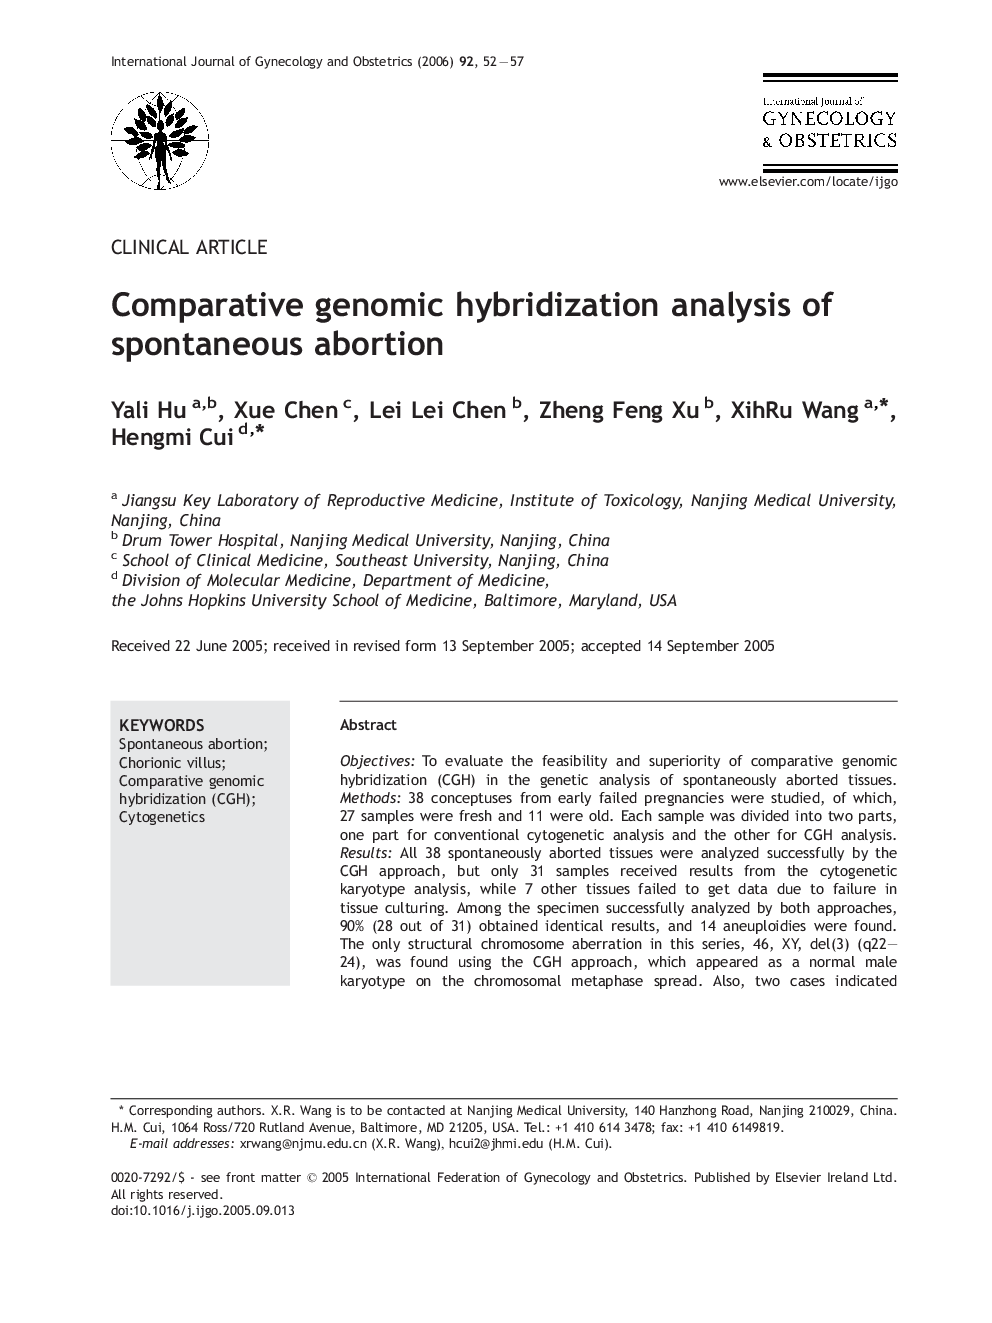 Comparative genomic hybridization analysis of spontaneous abortion